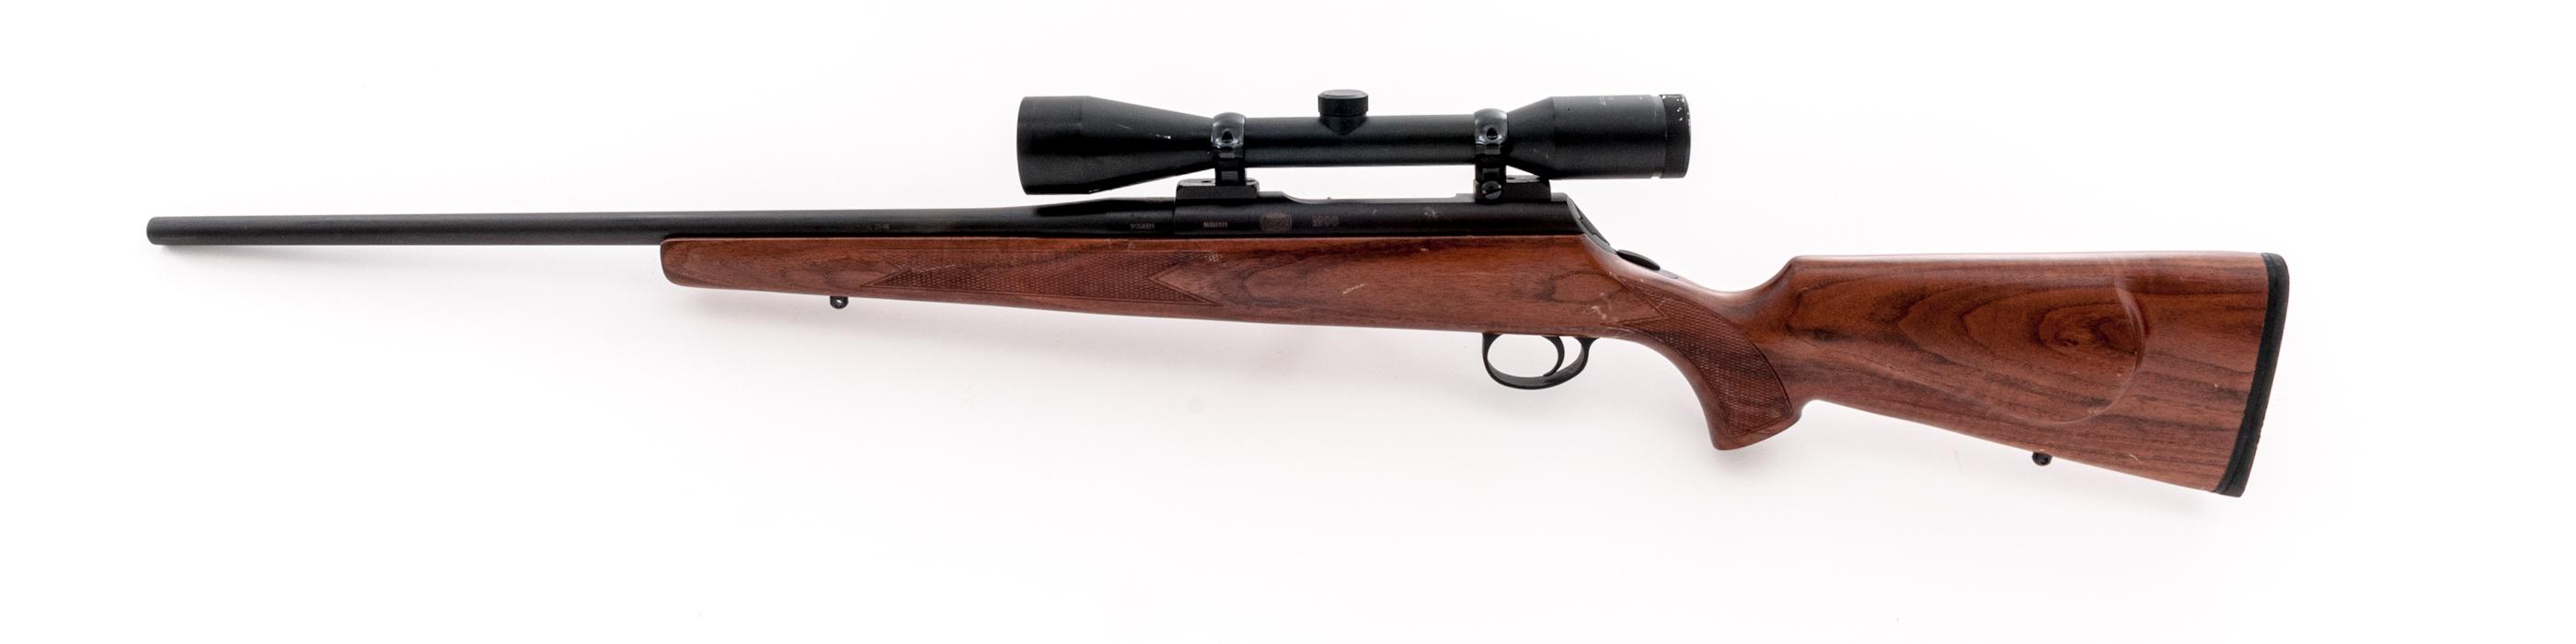 Mauser Model 96 Straight-Pull Rifle